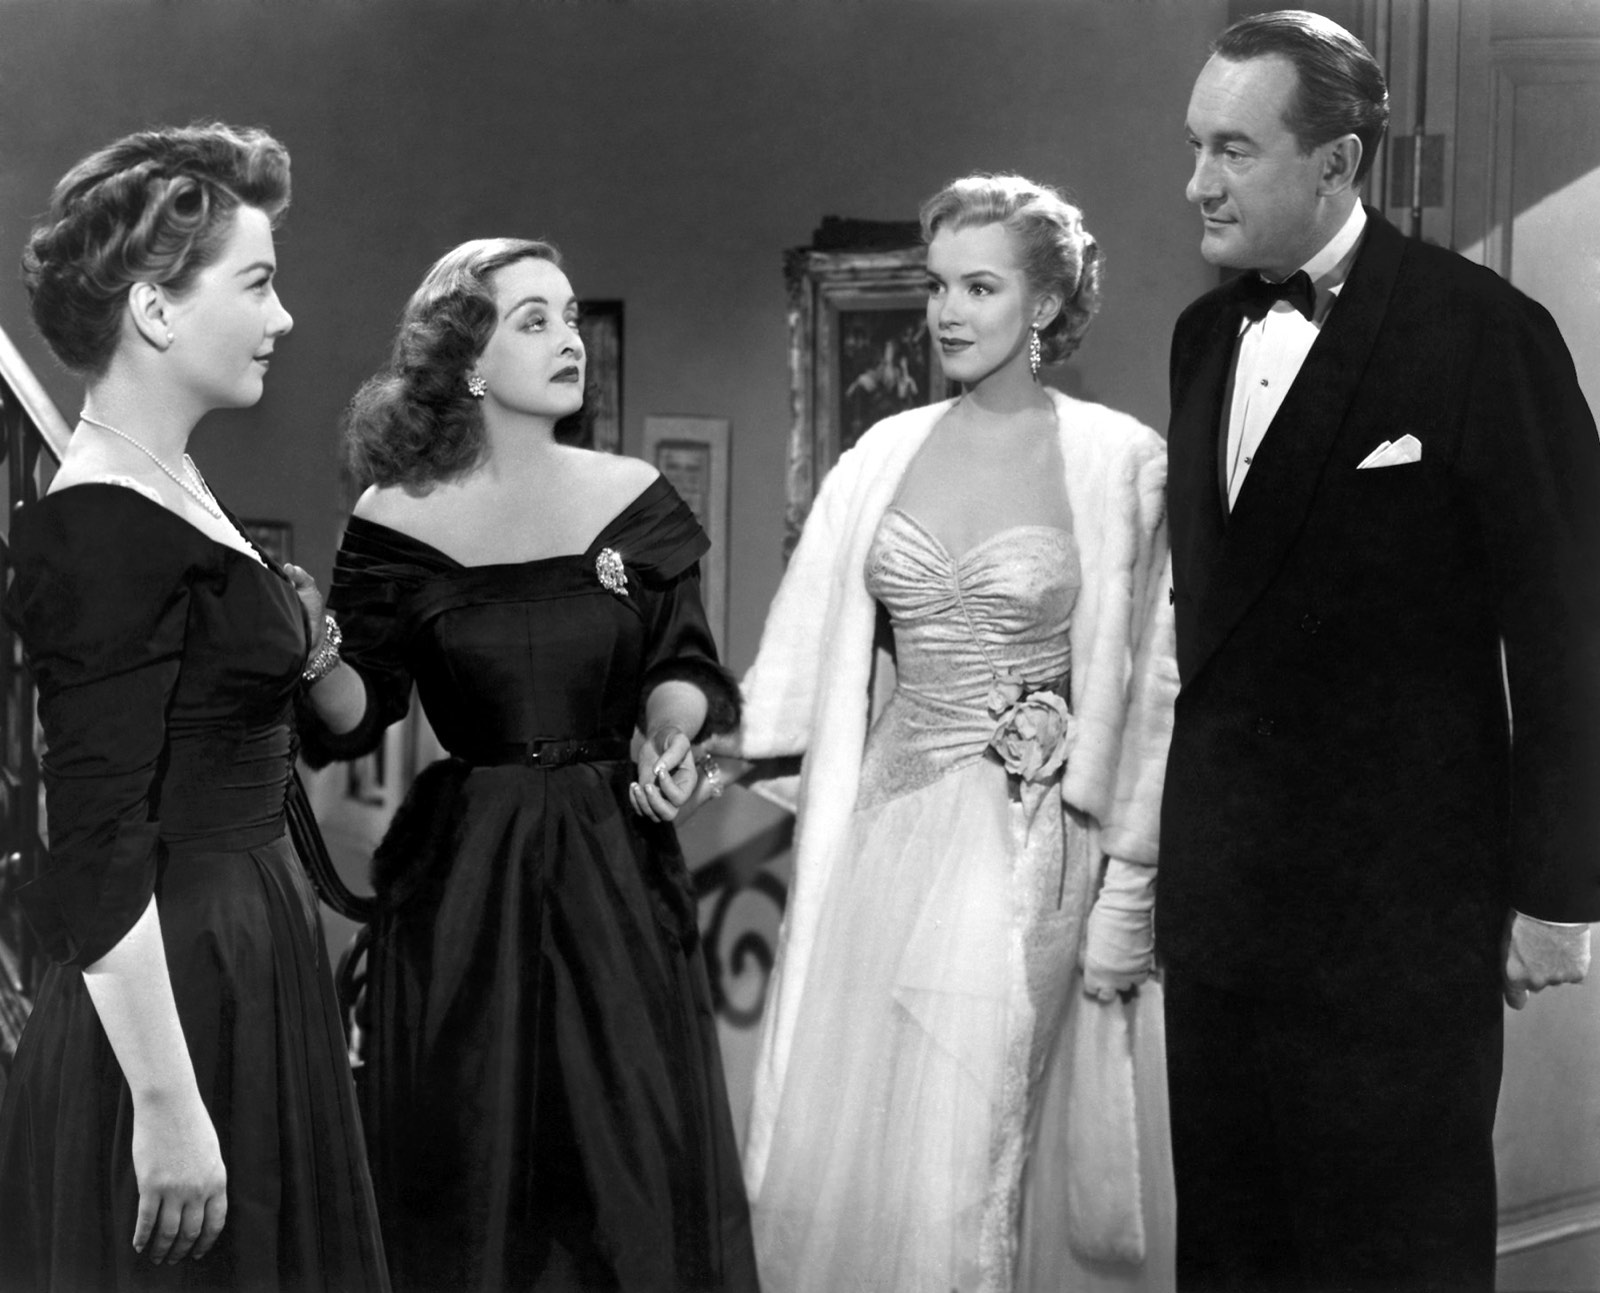 All About Eve (1950), dir. Joseph Mankiewicz